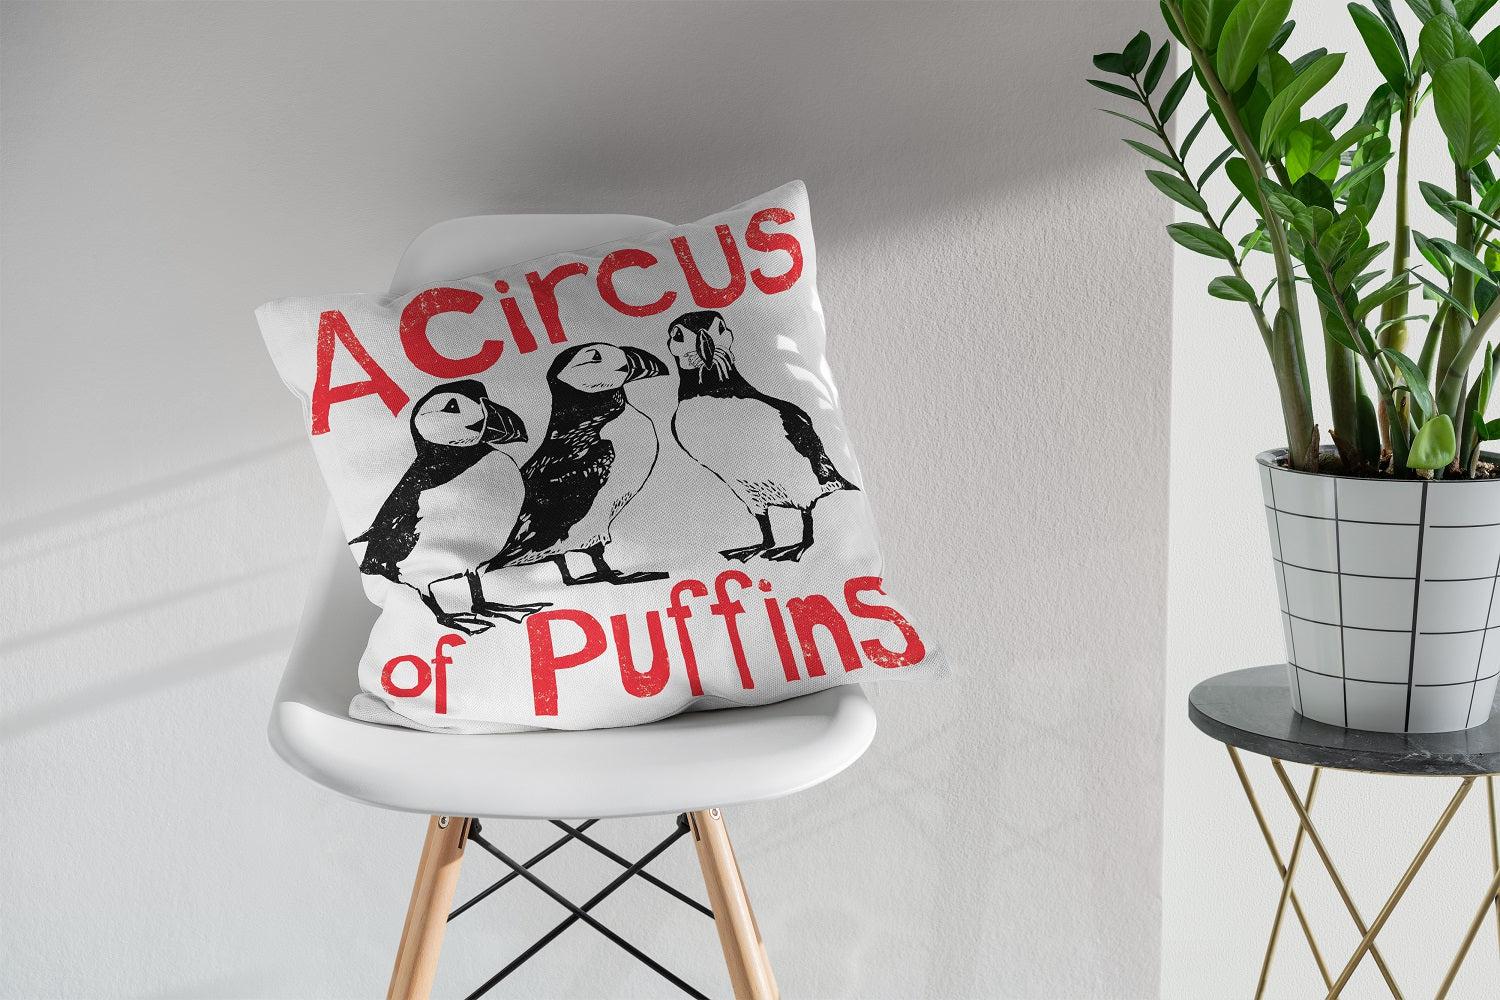 Circus of Puffins- Collective Noun Cushion